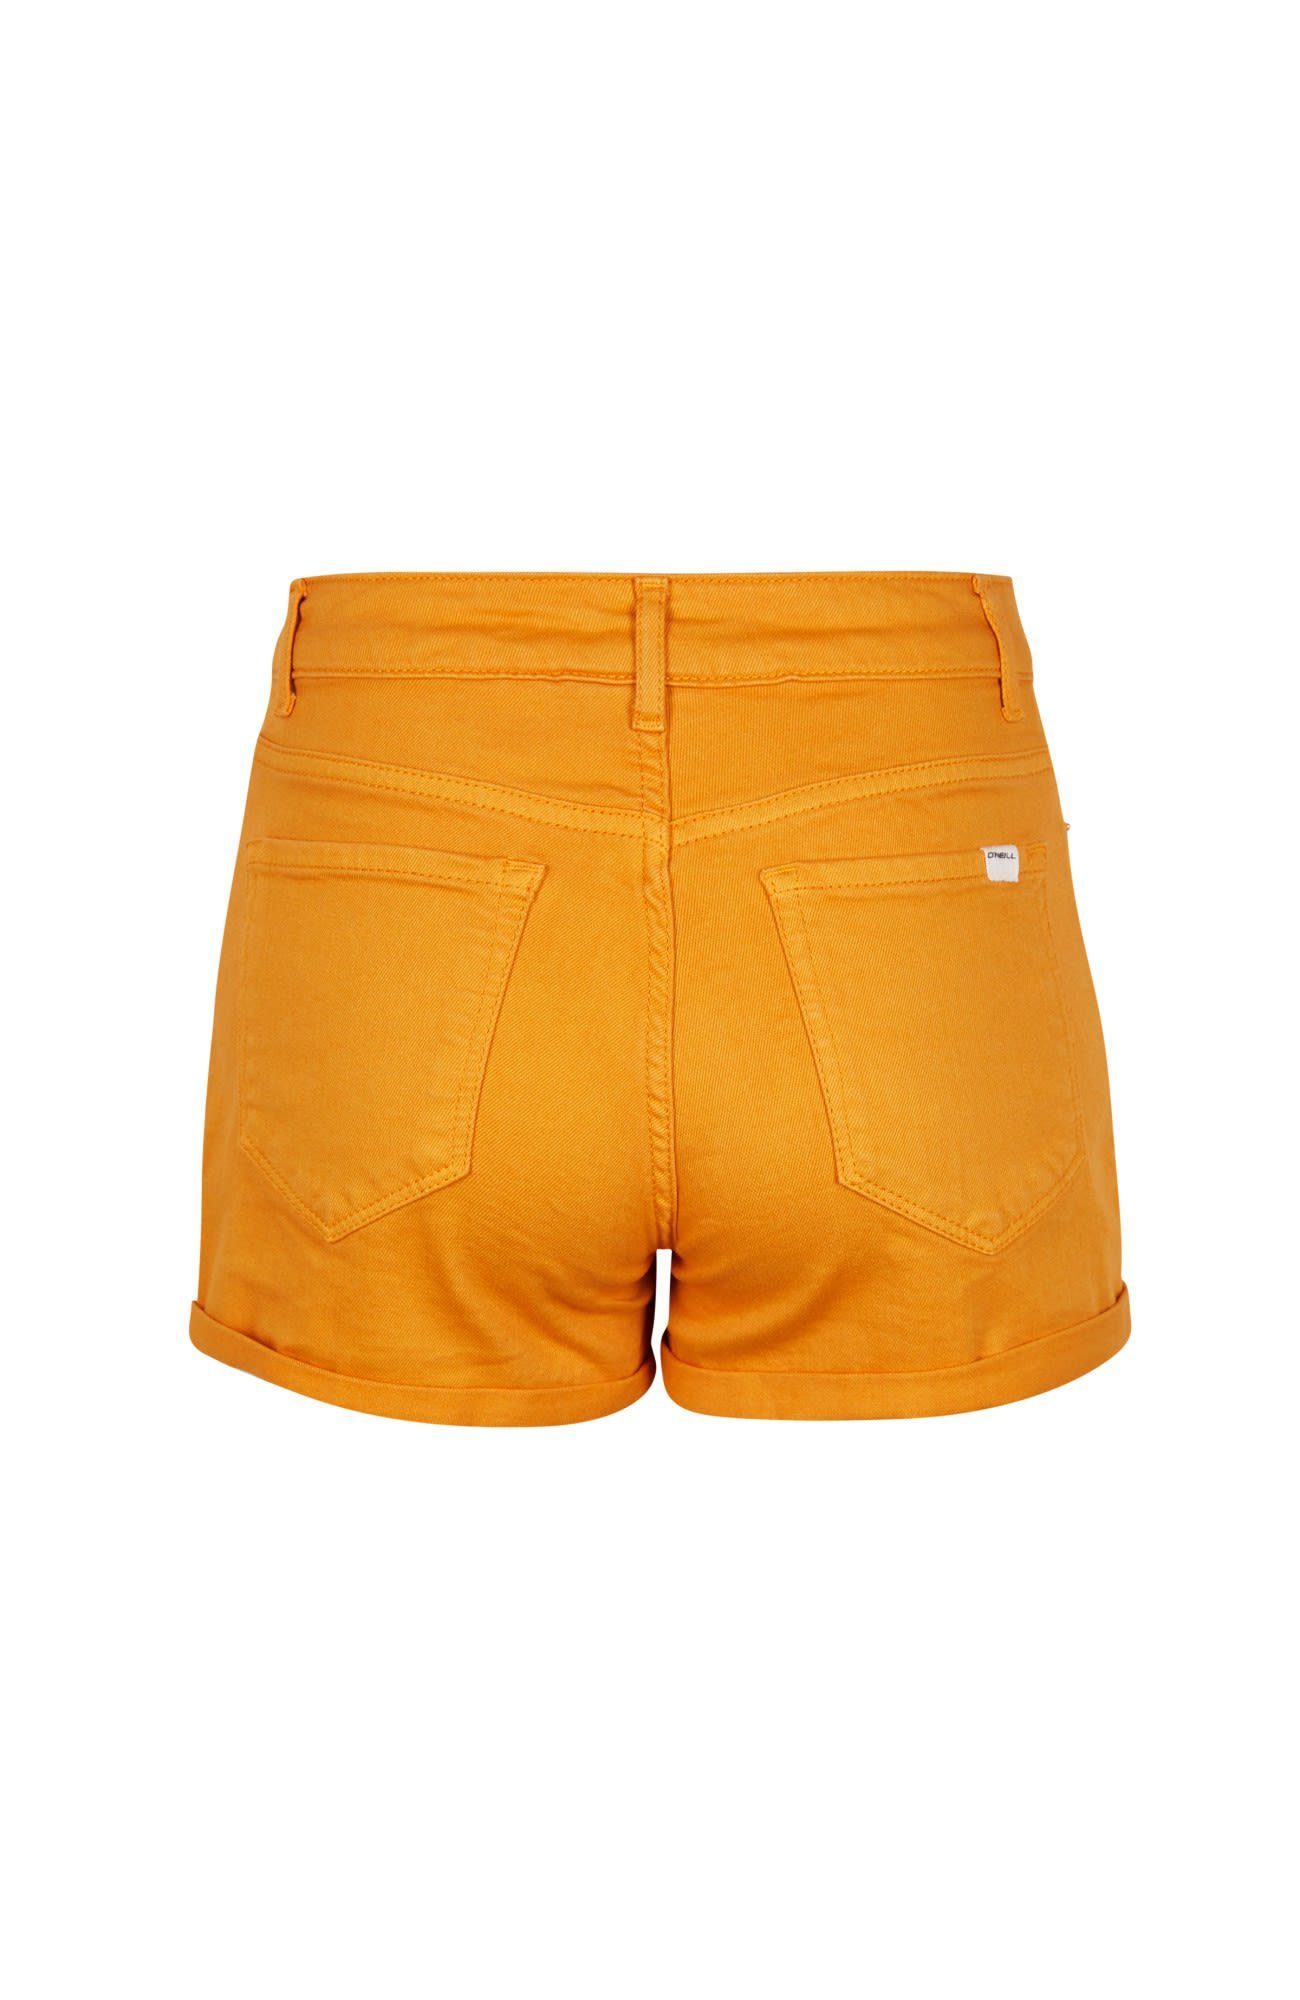 Pkt Oneill Damen Strandshorts W 5 O'Neill Shorts Essential Yellow Stretch